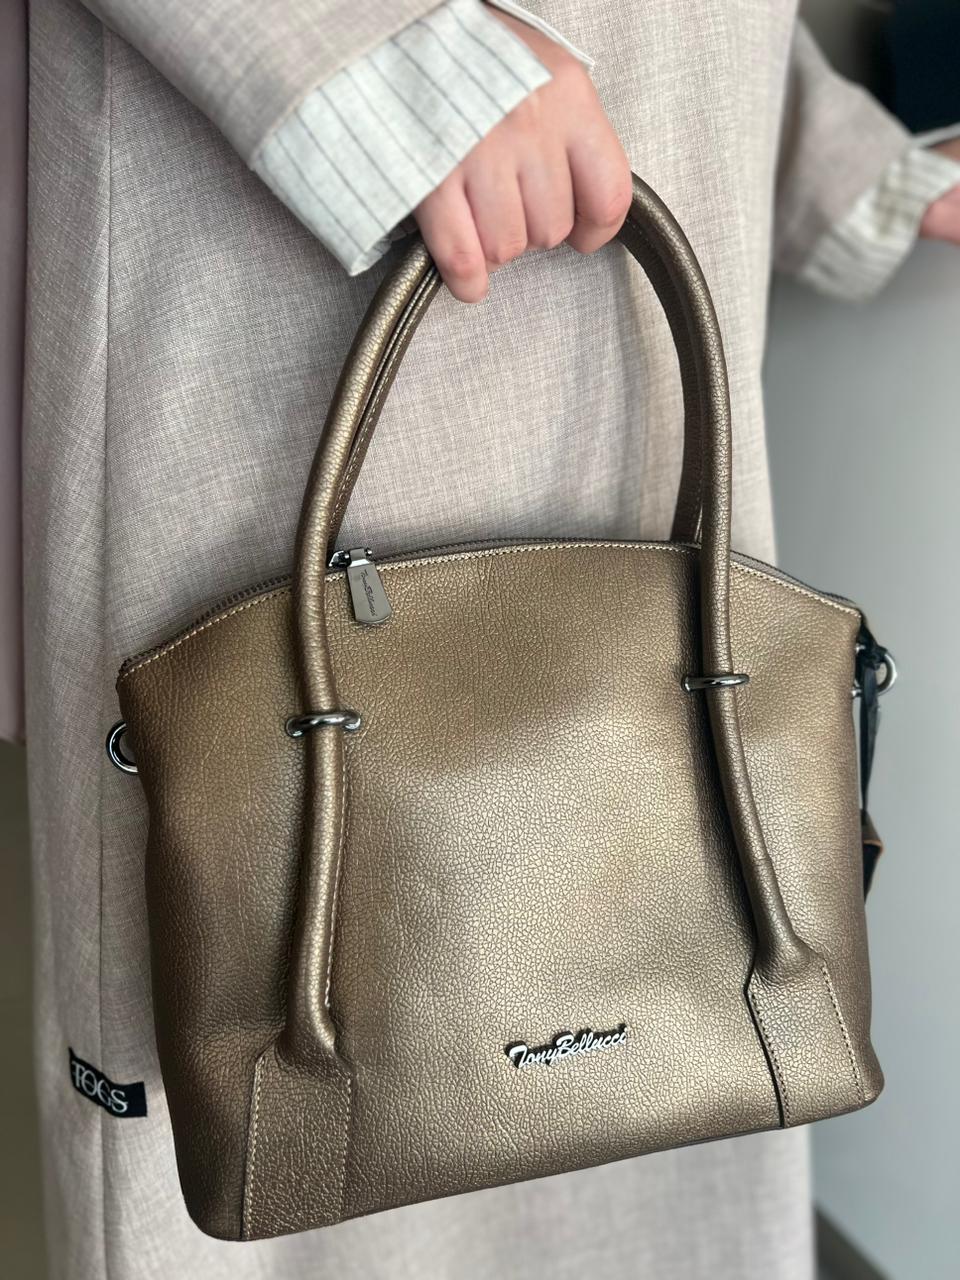 The Perfect Handbag